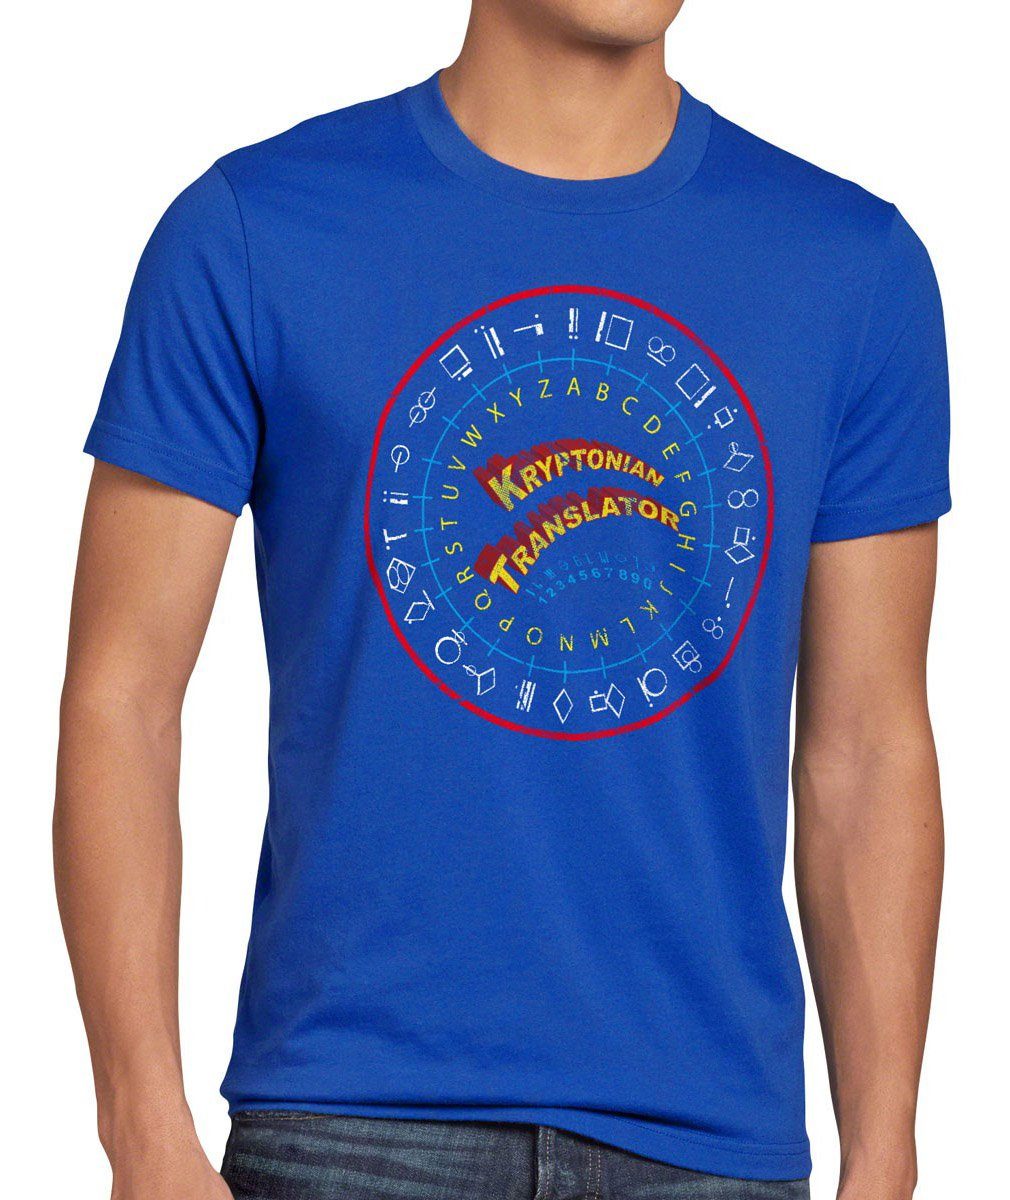 style3 Print-Shirt Herren Cooper Translator Super Man Bang Big Sheldon Kryptonian blau Theory T-Shirt